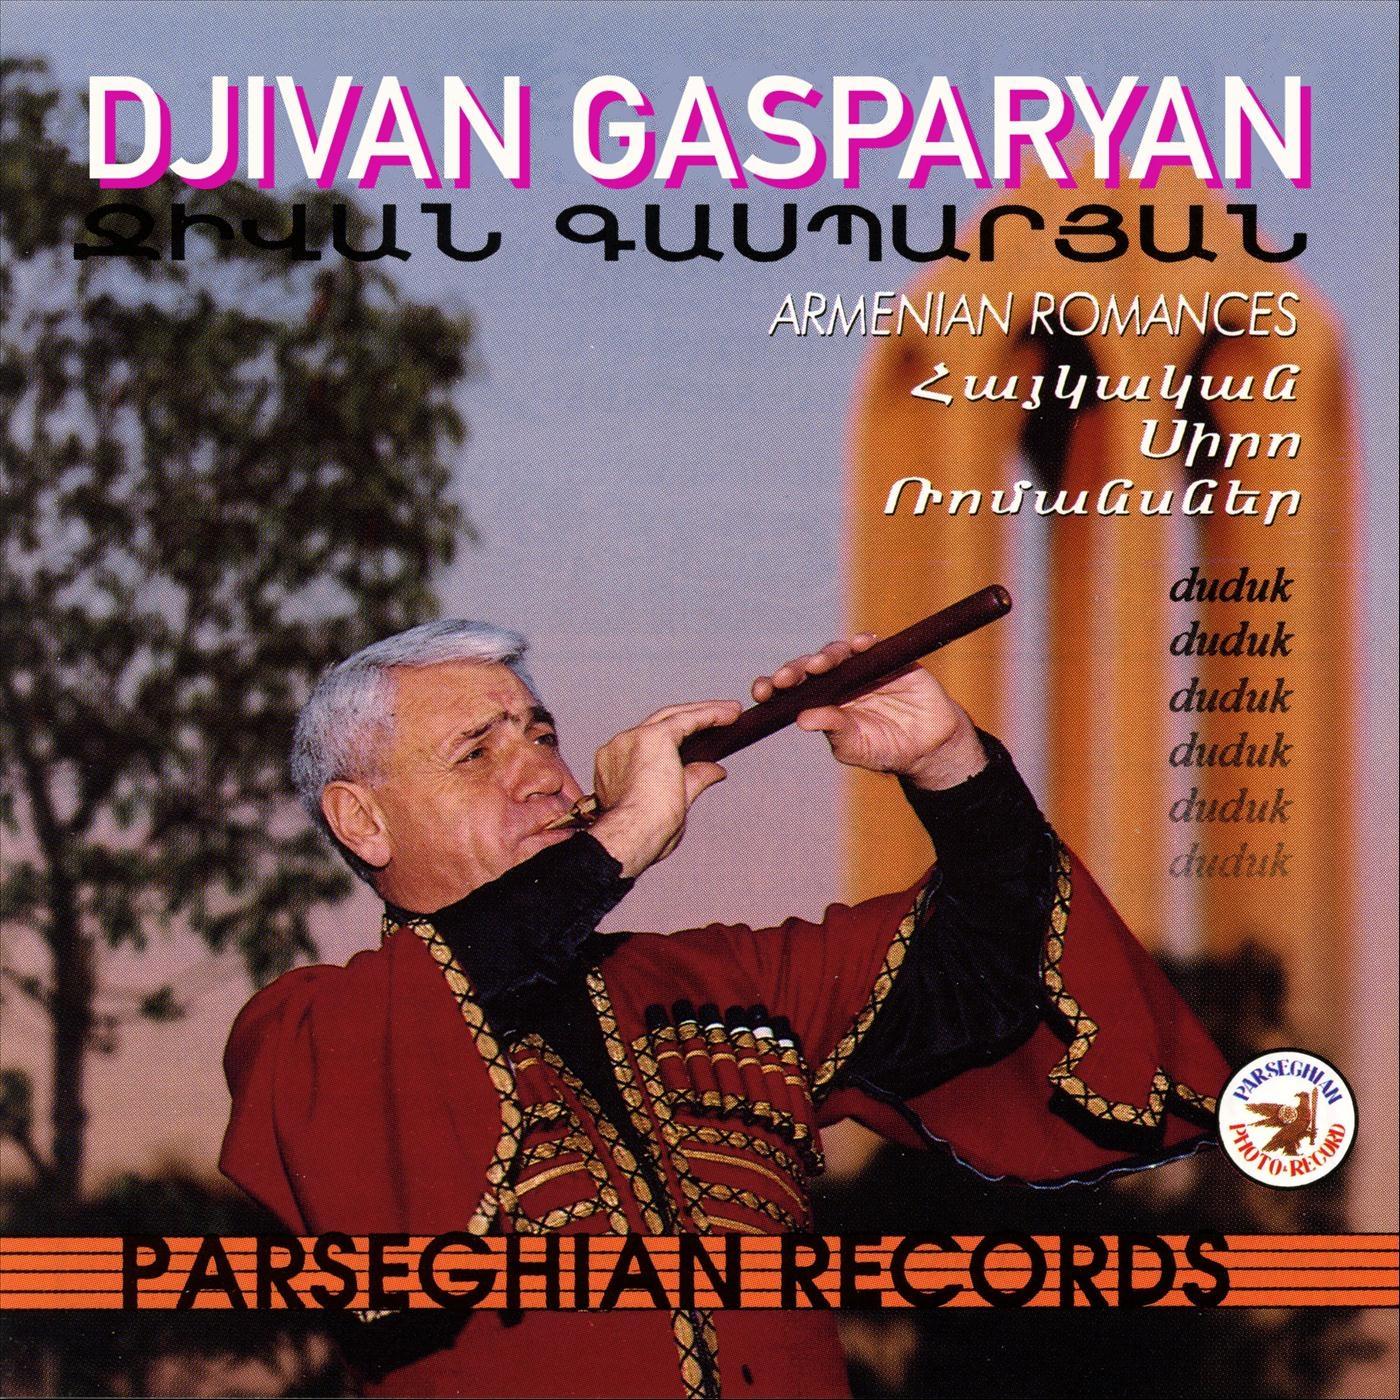 Djivan Gasparyan - Gabouyd Manoushag